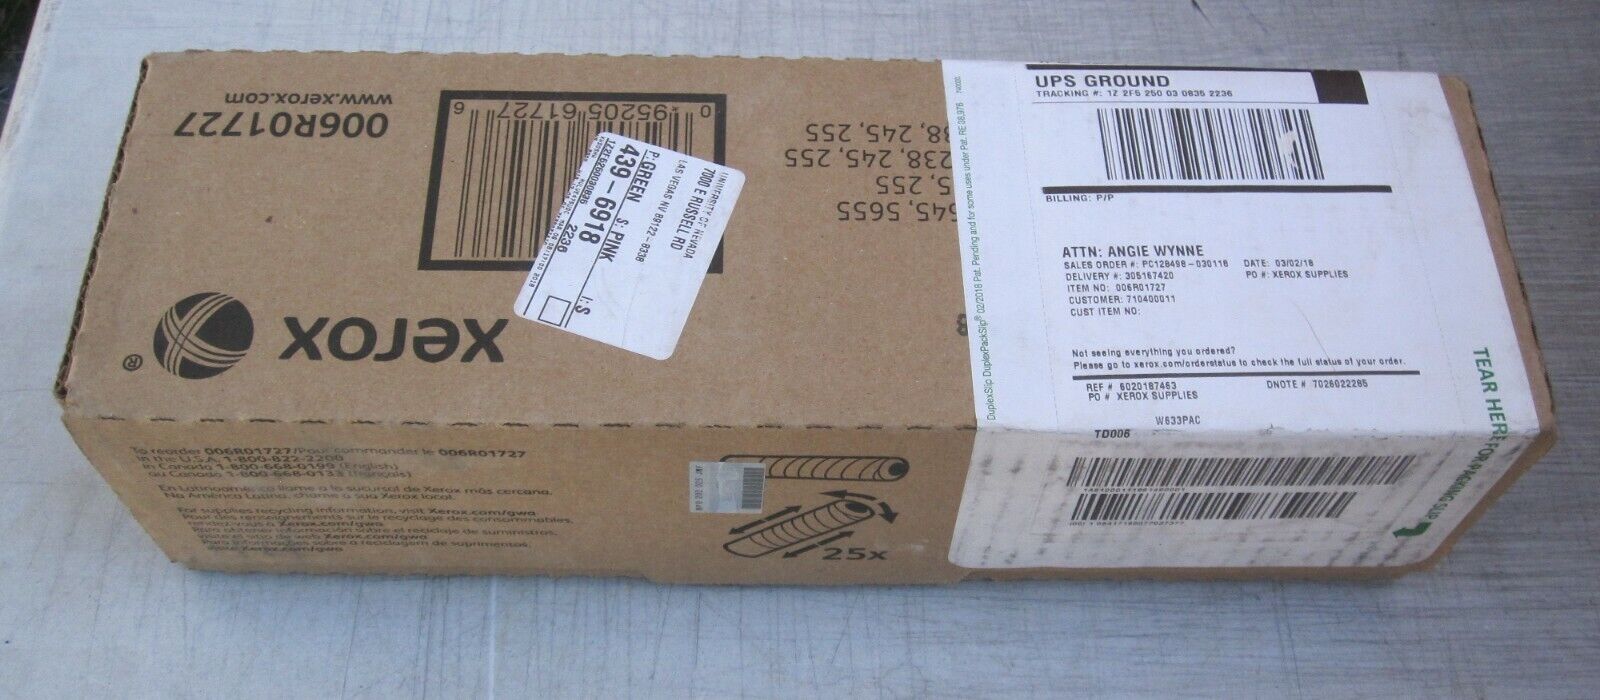 Genuine Xerox 006R01727 R1 Black Toner Cartridge - NEW Sealed in Box